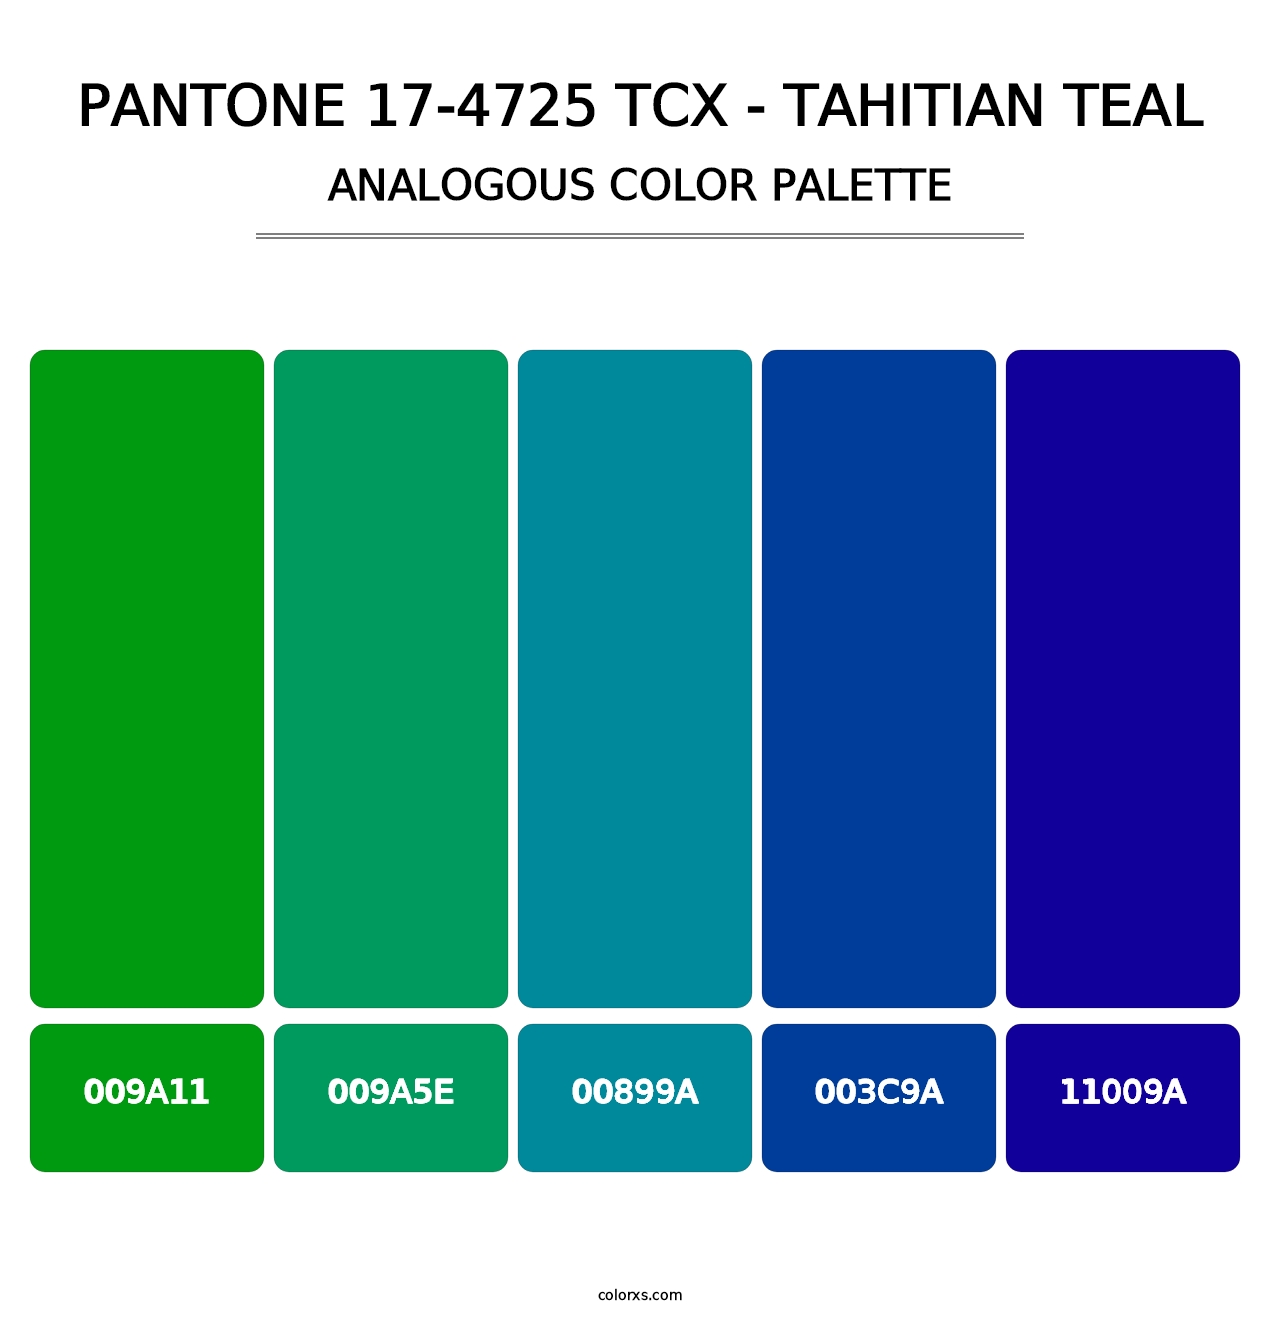 PANTONE 17-4725 TCX - Tahitian Teal - Analogous Color Palette